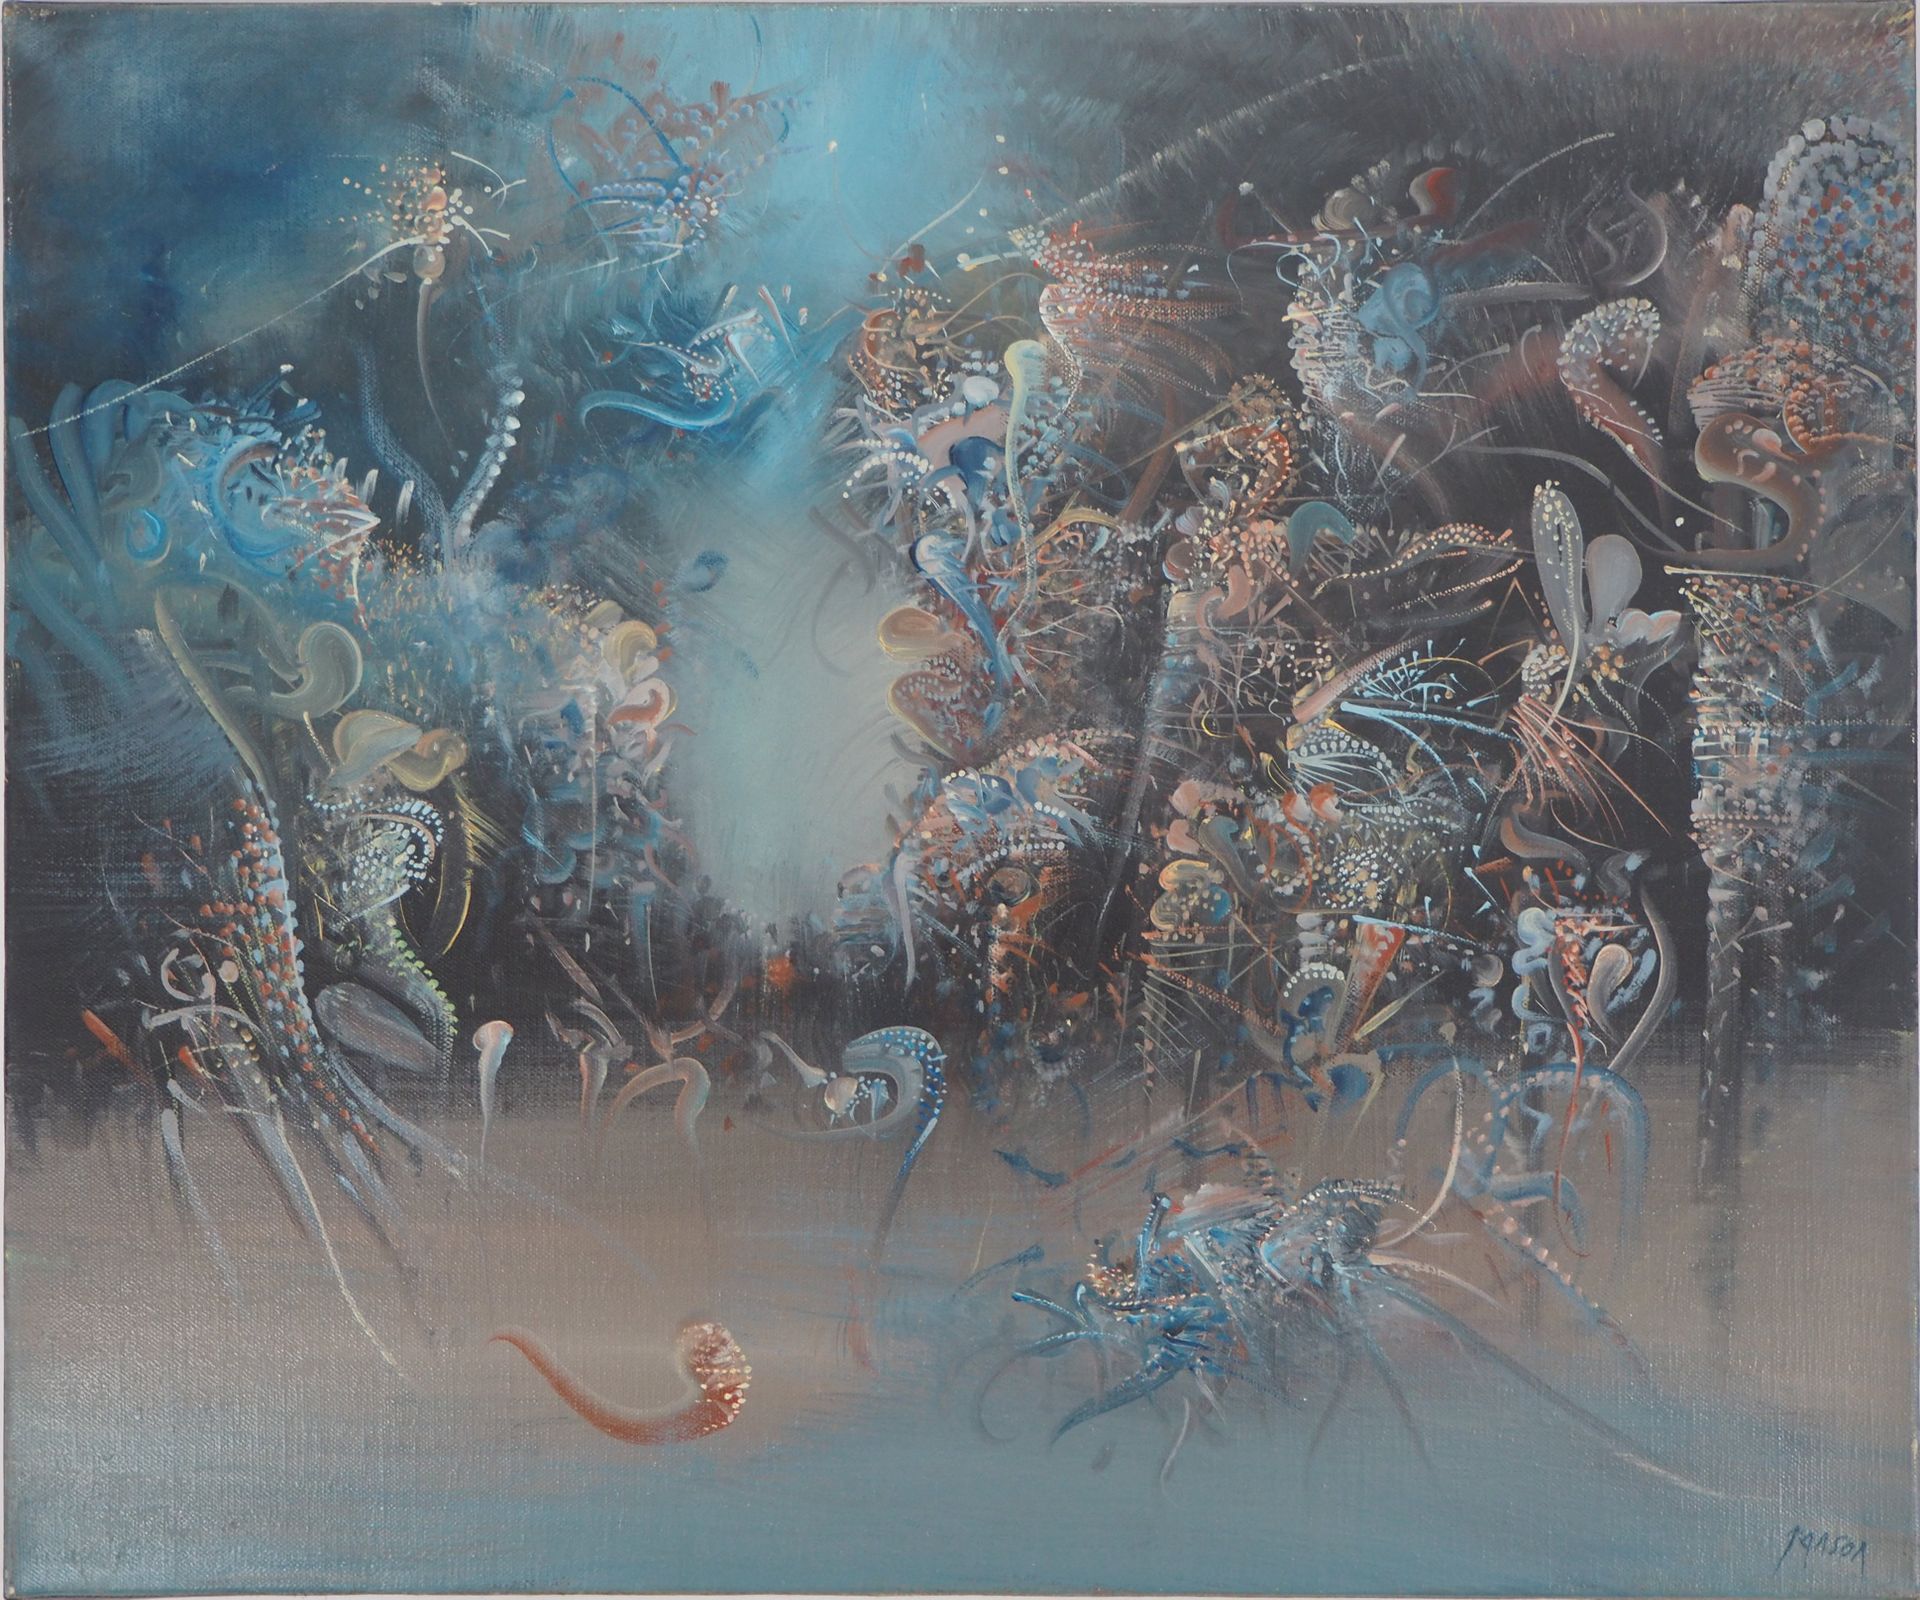 Marc JANSON 马克-詹森(1930-)

超现实主义的海

布面油画

右下方有签名

背面反签

画布上46×55厘米

状况极佳



拍品将由我&hellip;